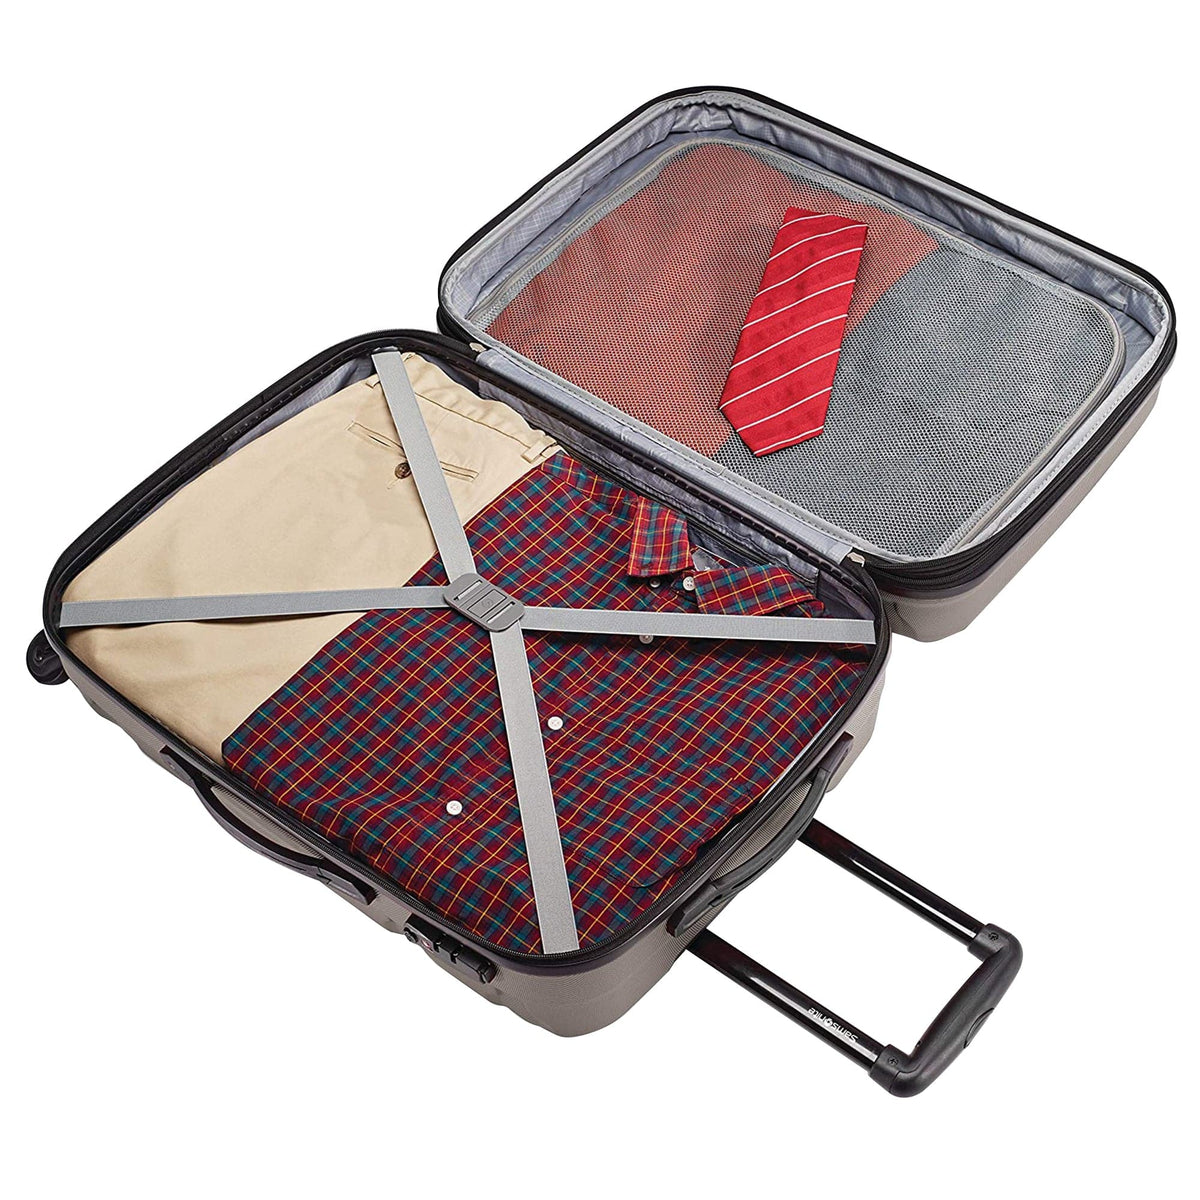 Samsonite Omni 20" Carry-On Spinner Luggage